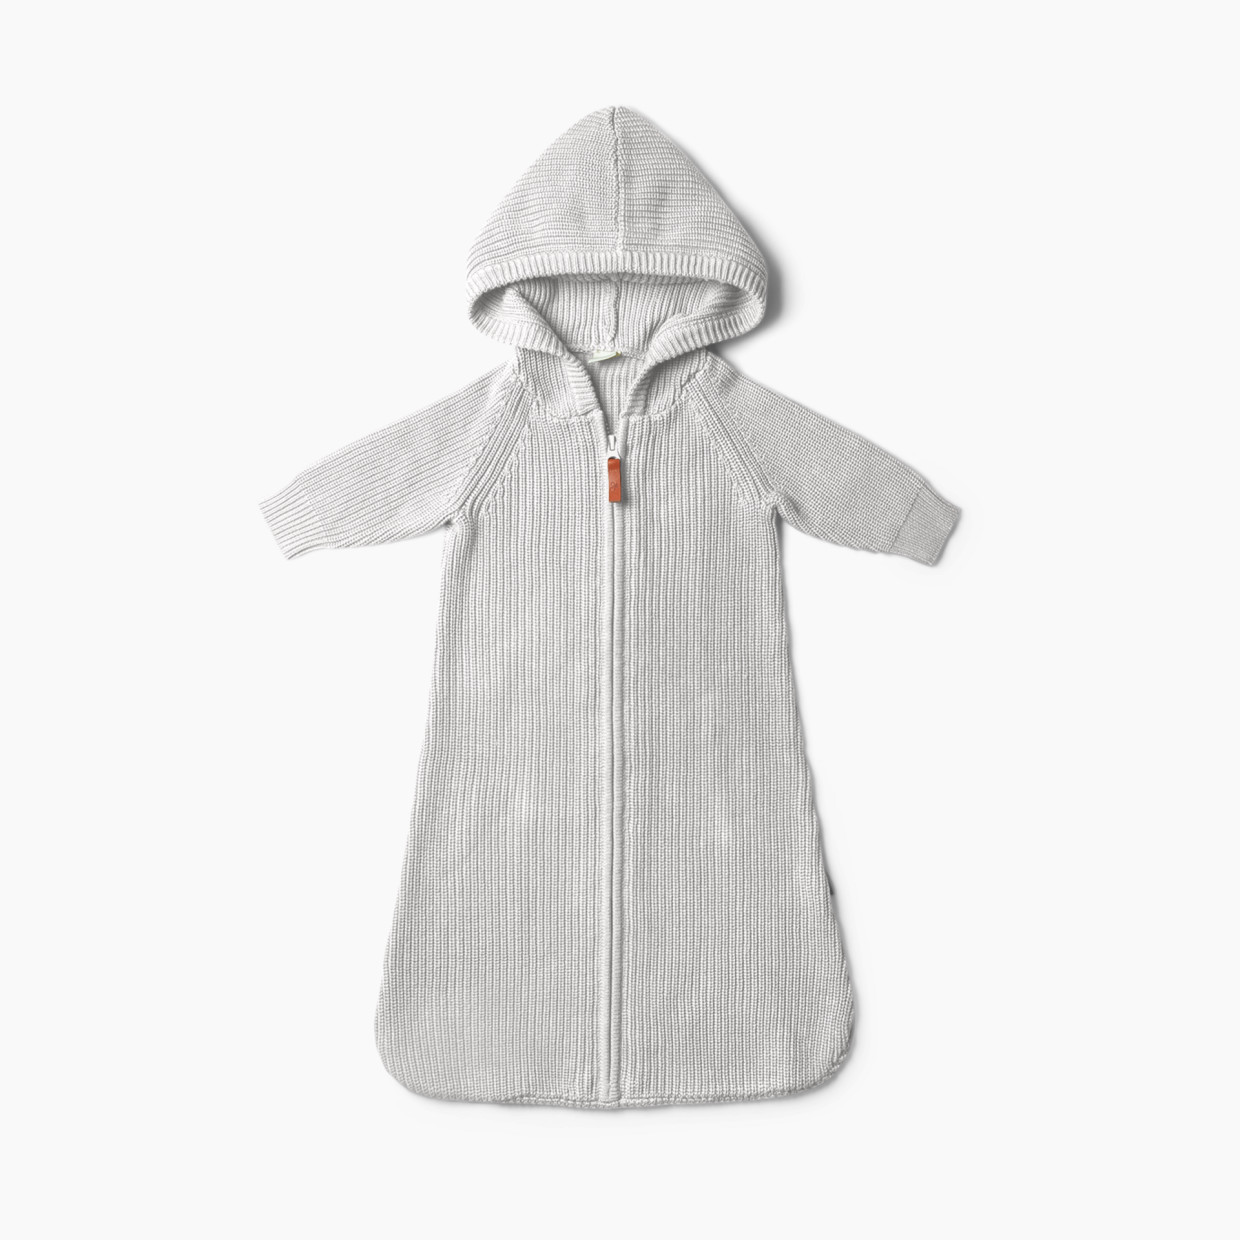 Goumi Kids Organic Knit Wearable Baby Blanket - Storm Gray, L.